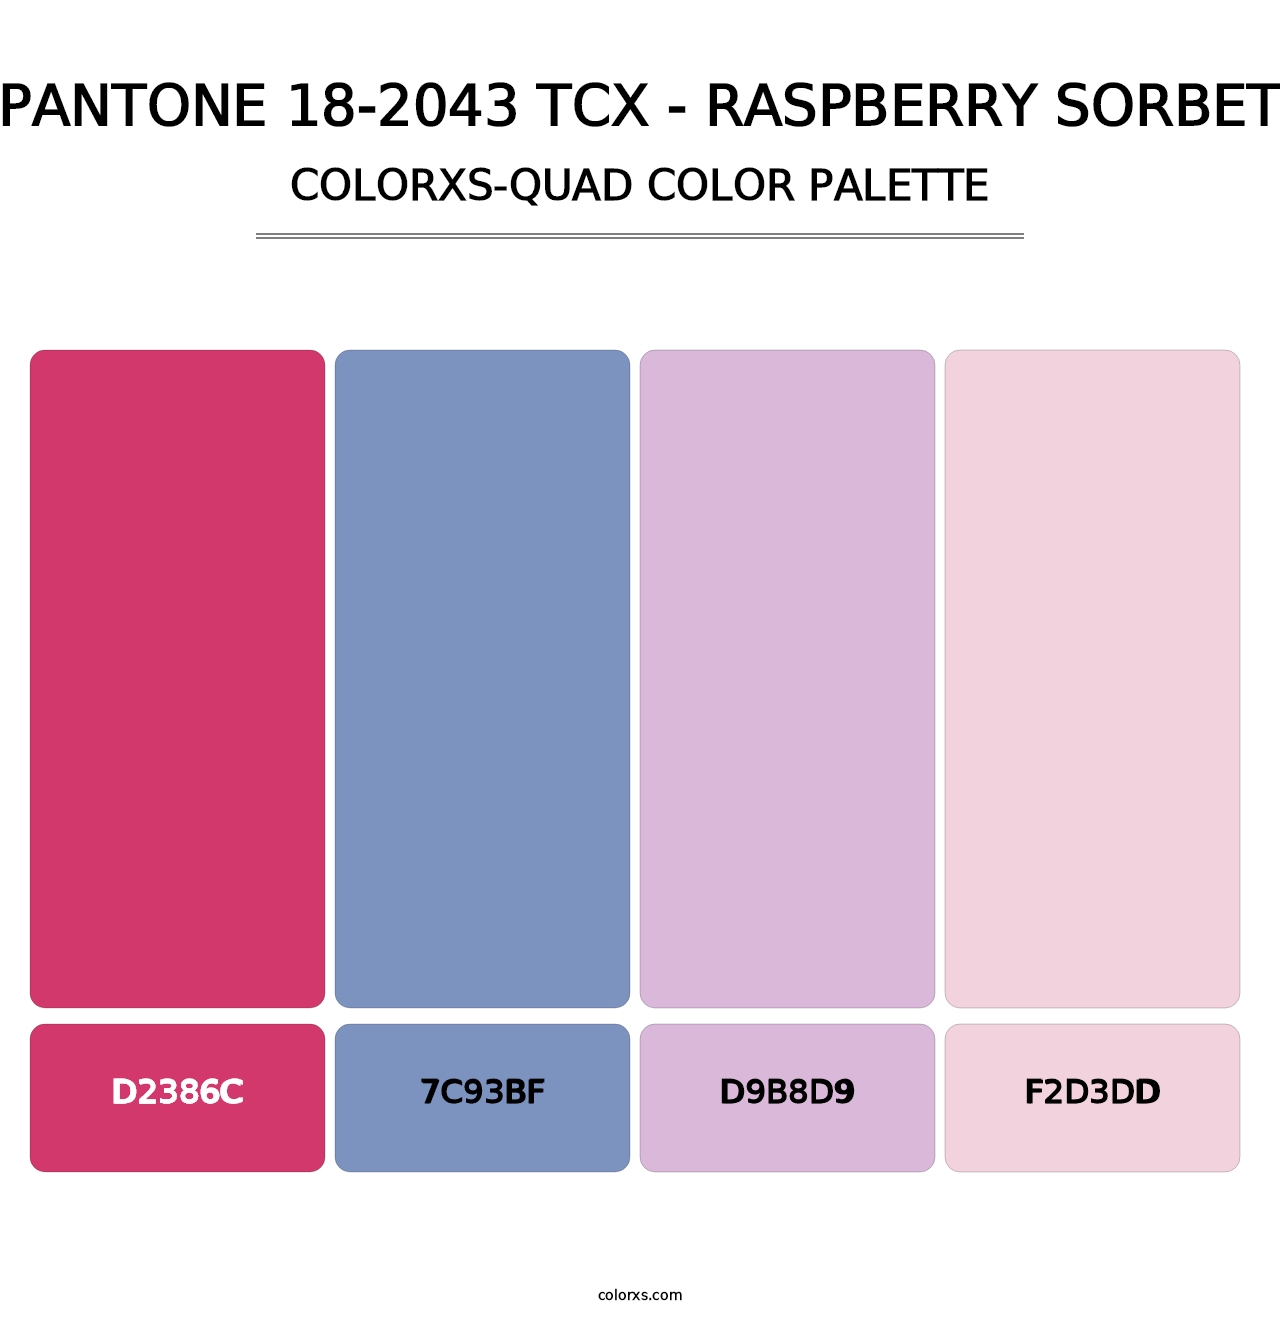 PANTONE 18-2043 TCX - Raspberry Sorbet - Colorxs Quad Palette